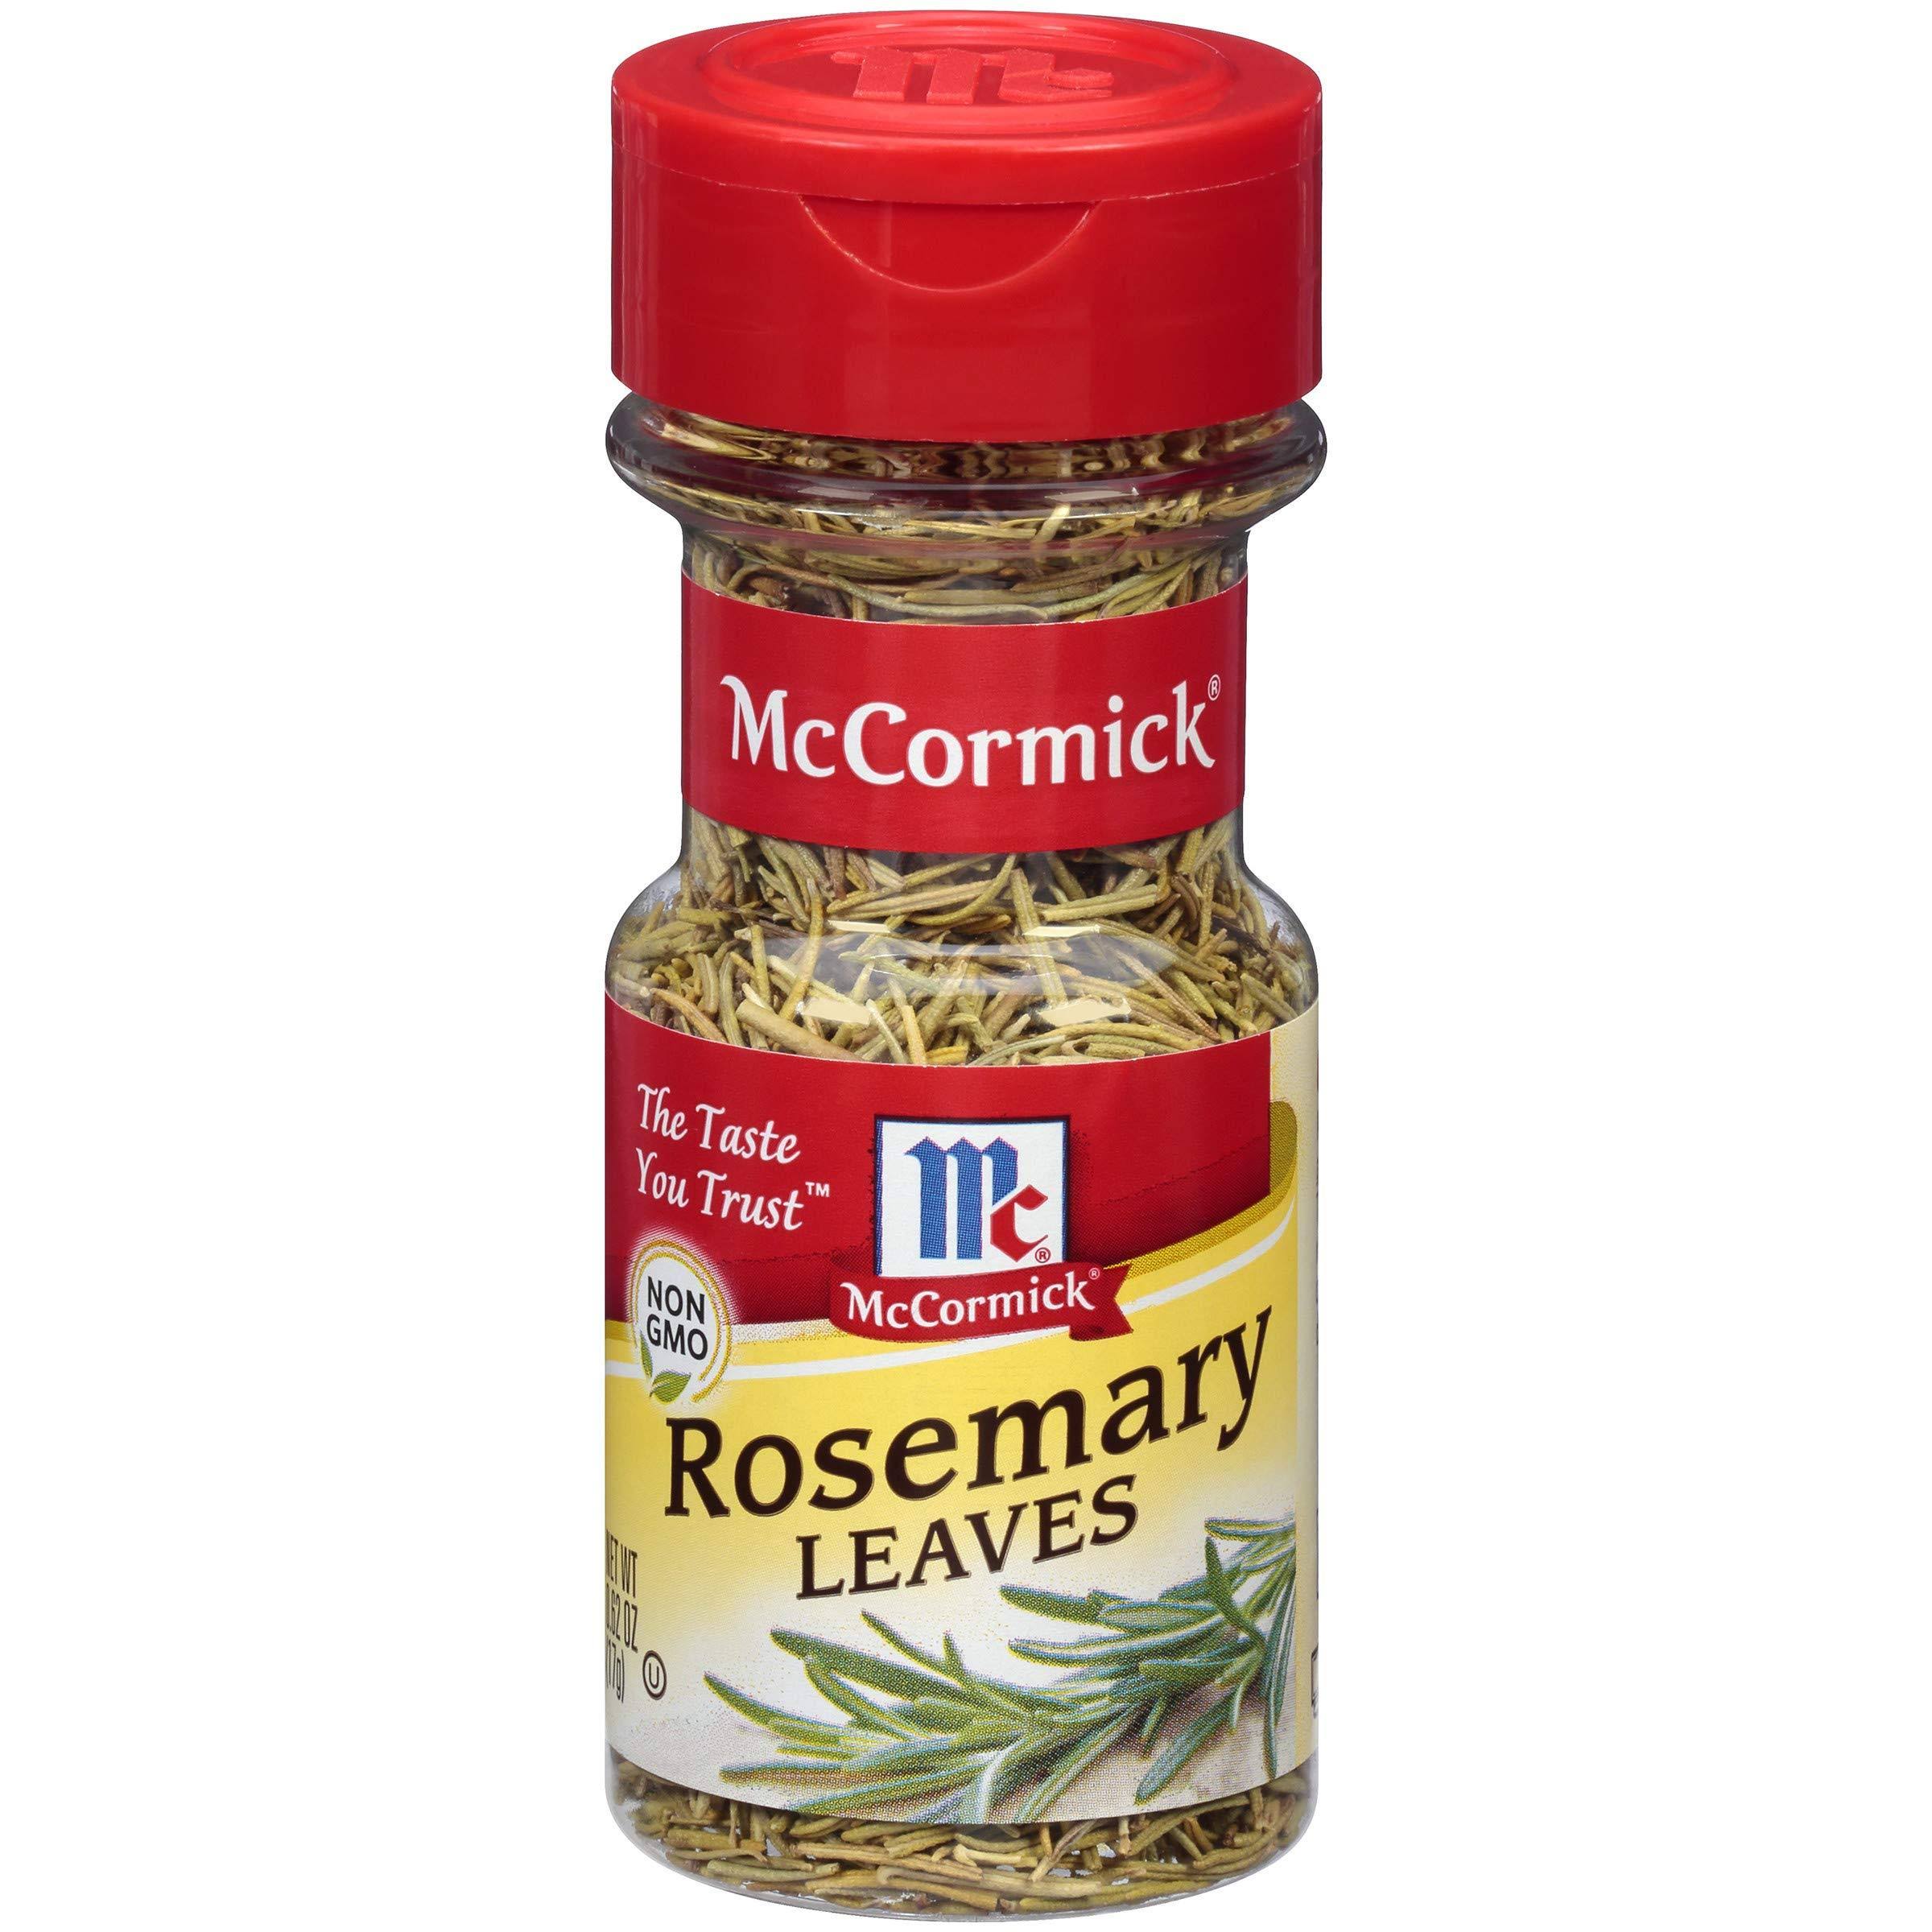 Mccormick Rosemary Leaves - 0.62 oz